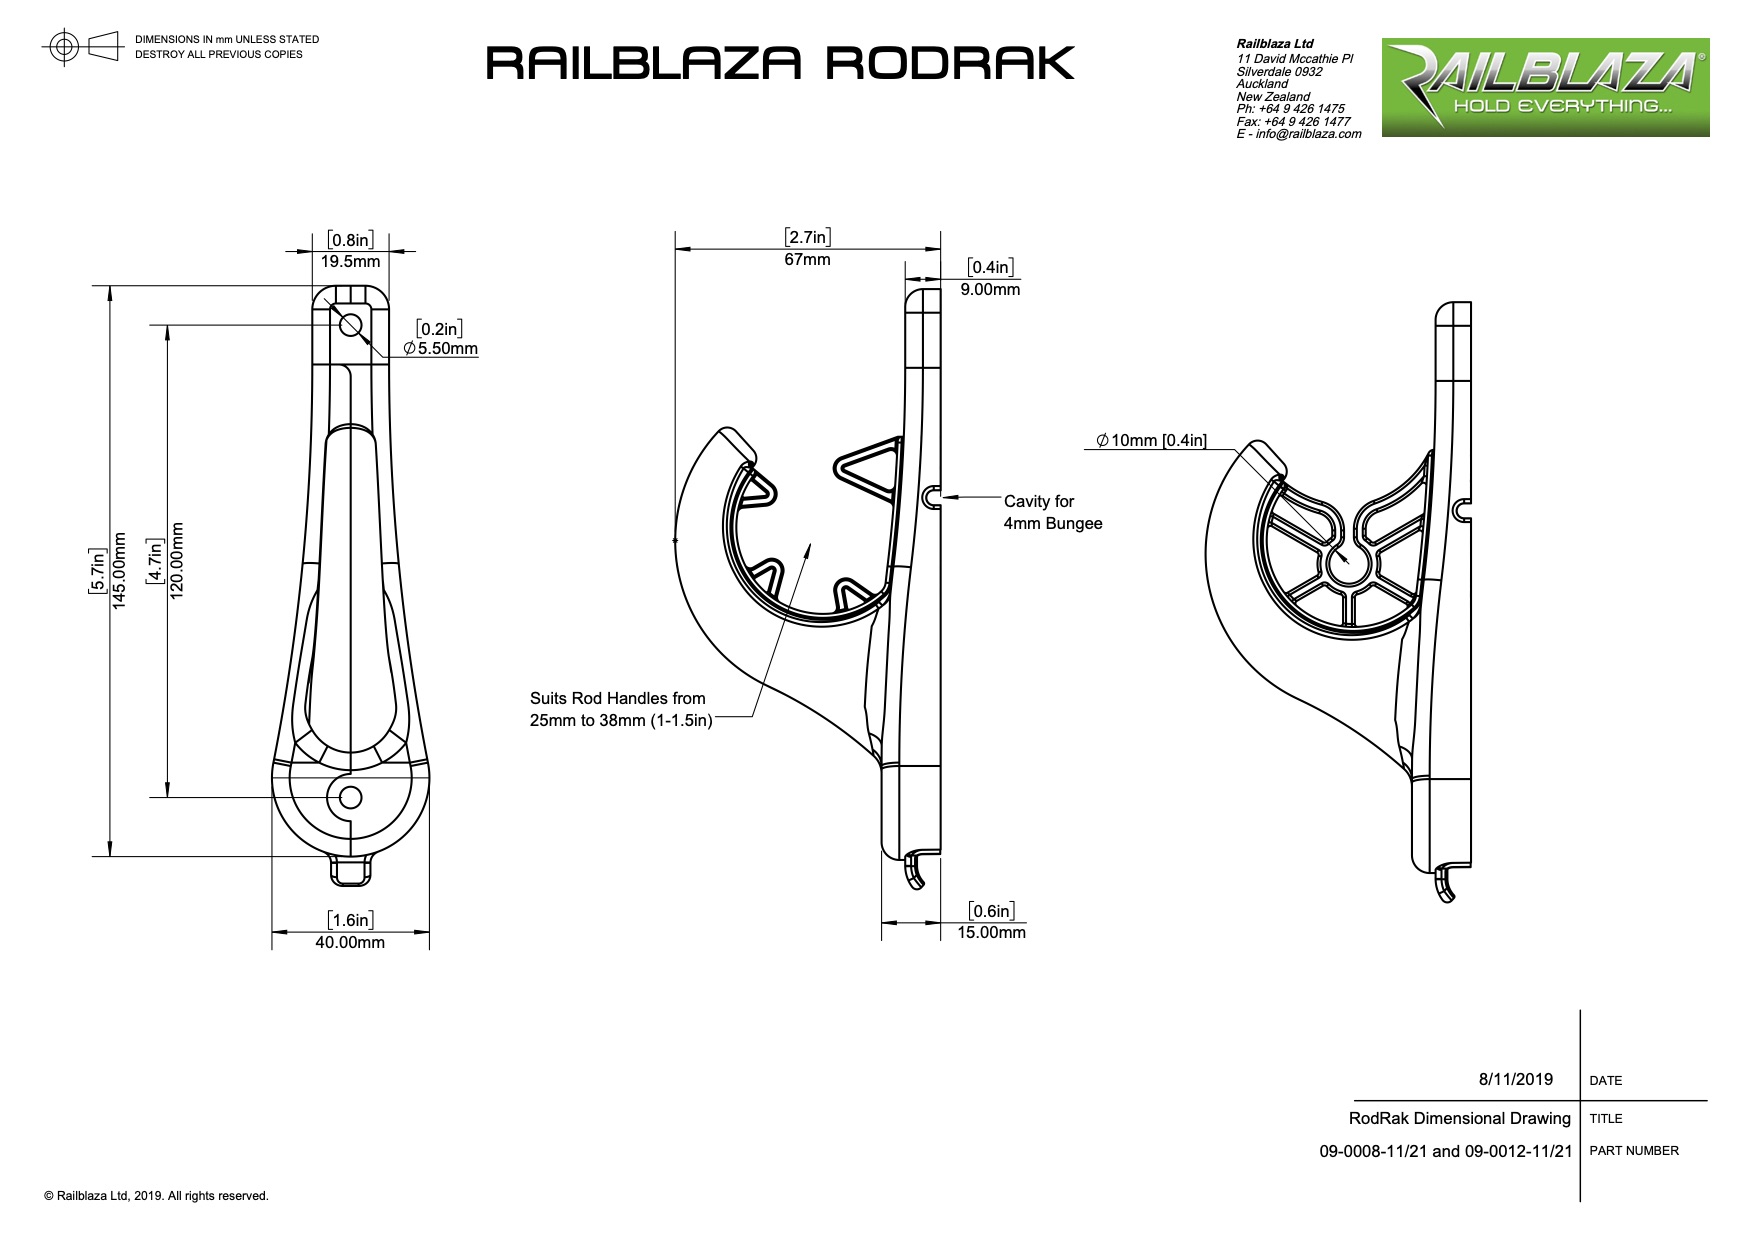 RodRak-Pole-Holder-RodRak-Fishing-Rod-Storage-Rack-RAILBLAZA-RodRak-Dimensioned-Drawing-2190_205107.jpg